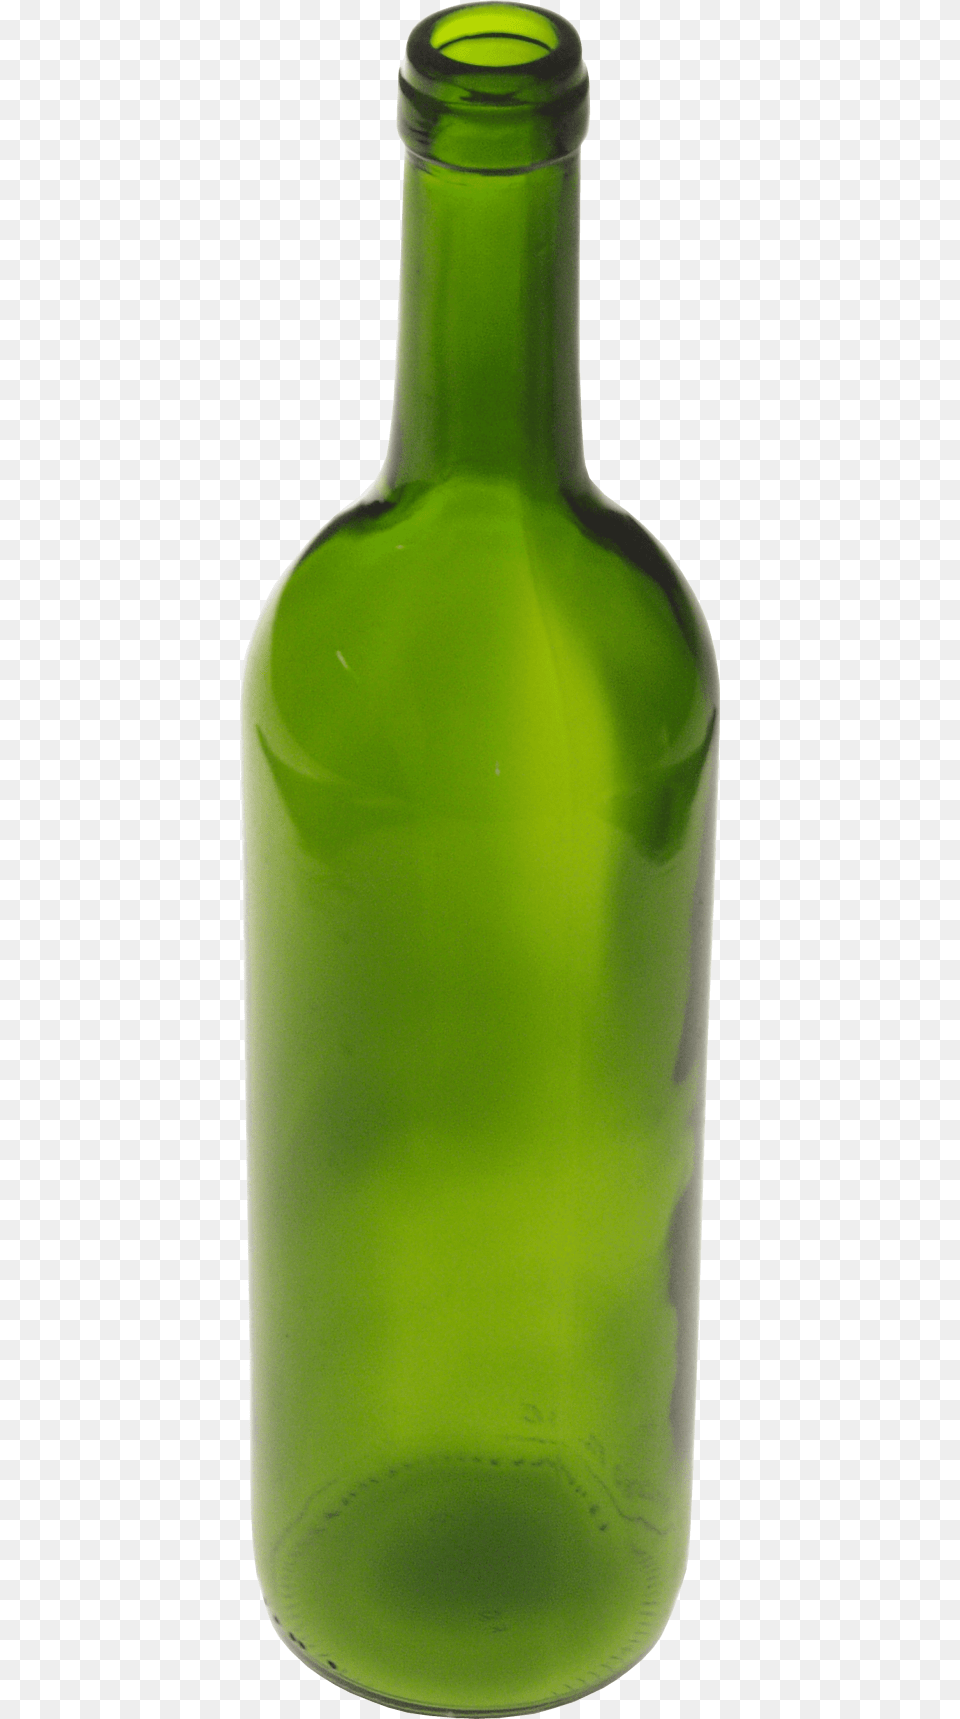 Free Empty Bottle Images Transparent, Glass, Alcohol, Beer, Beverage Png Image